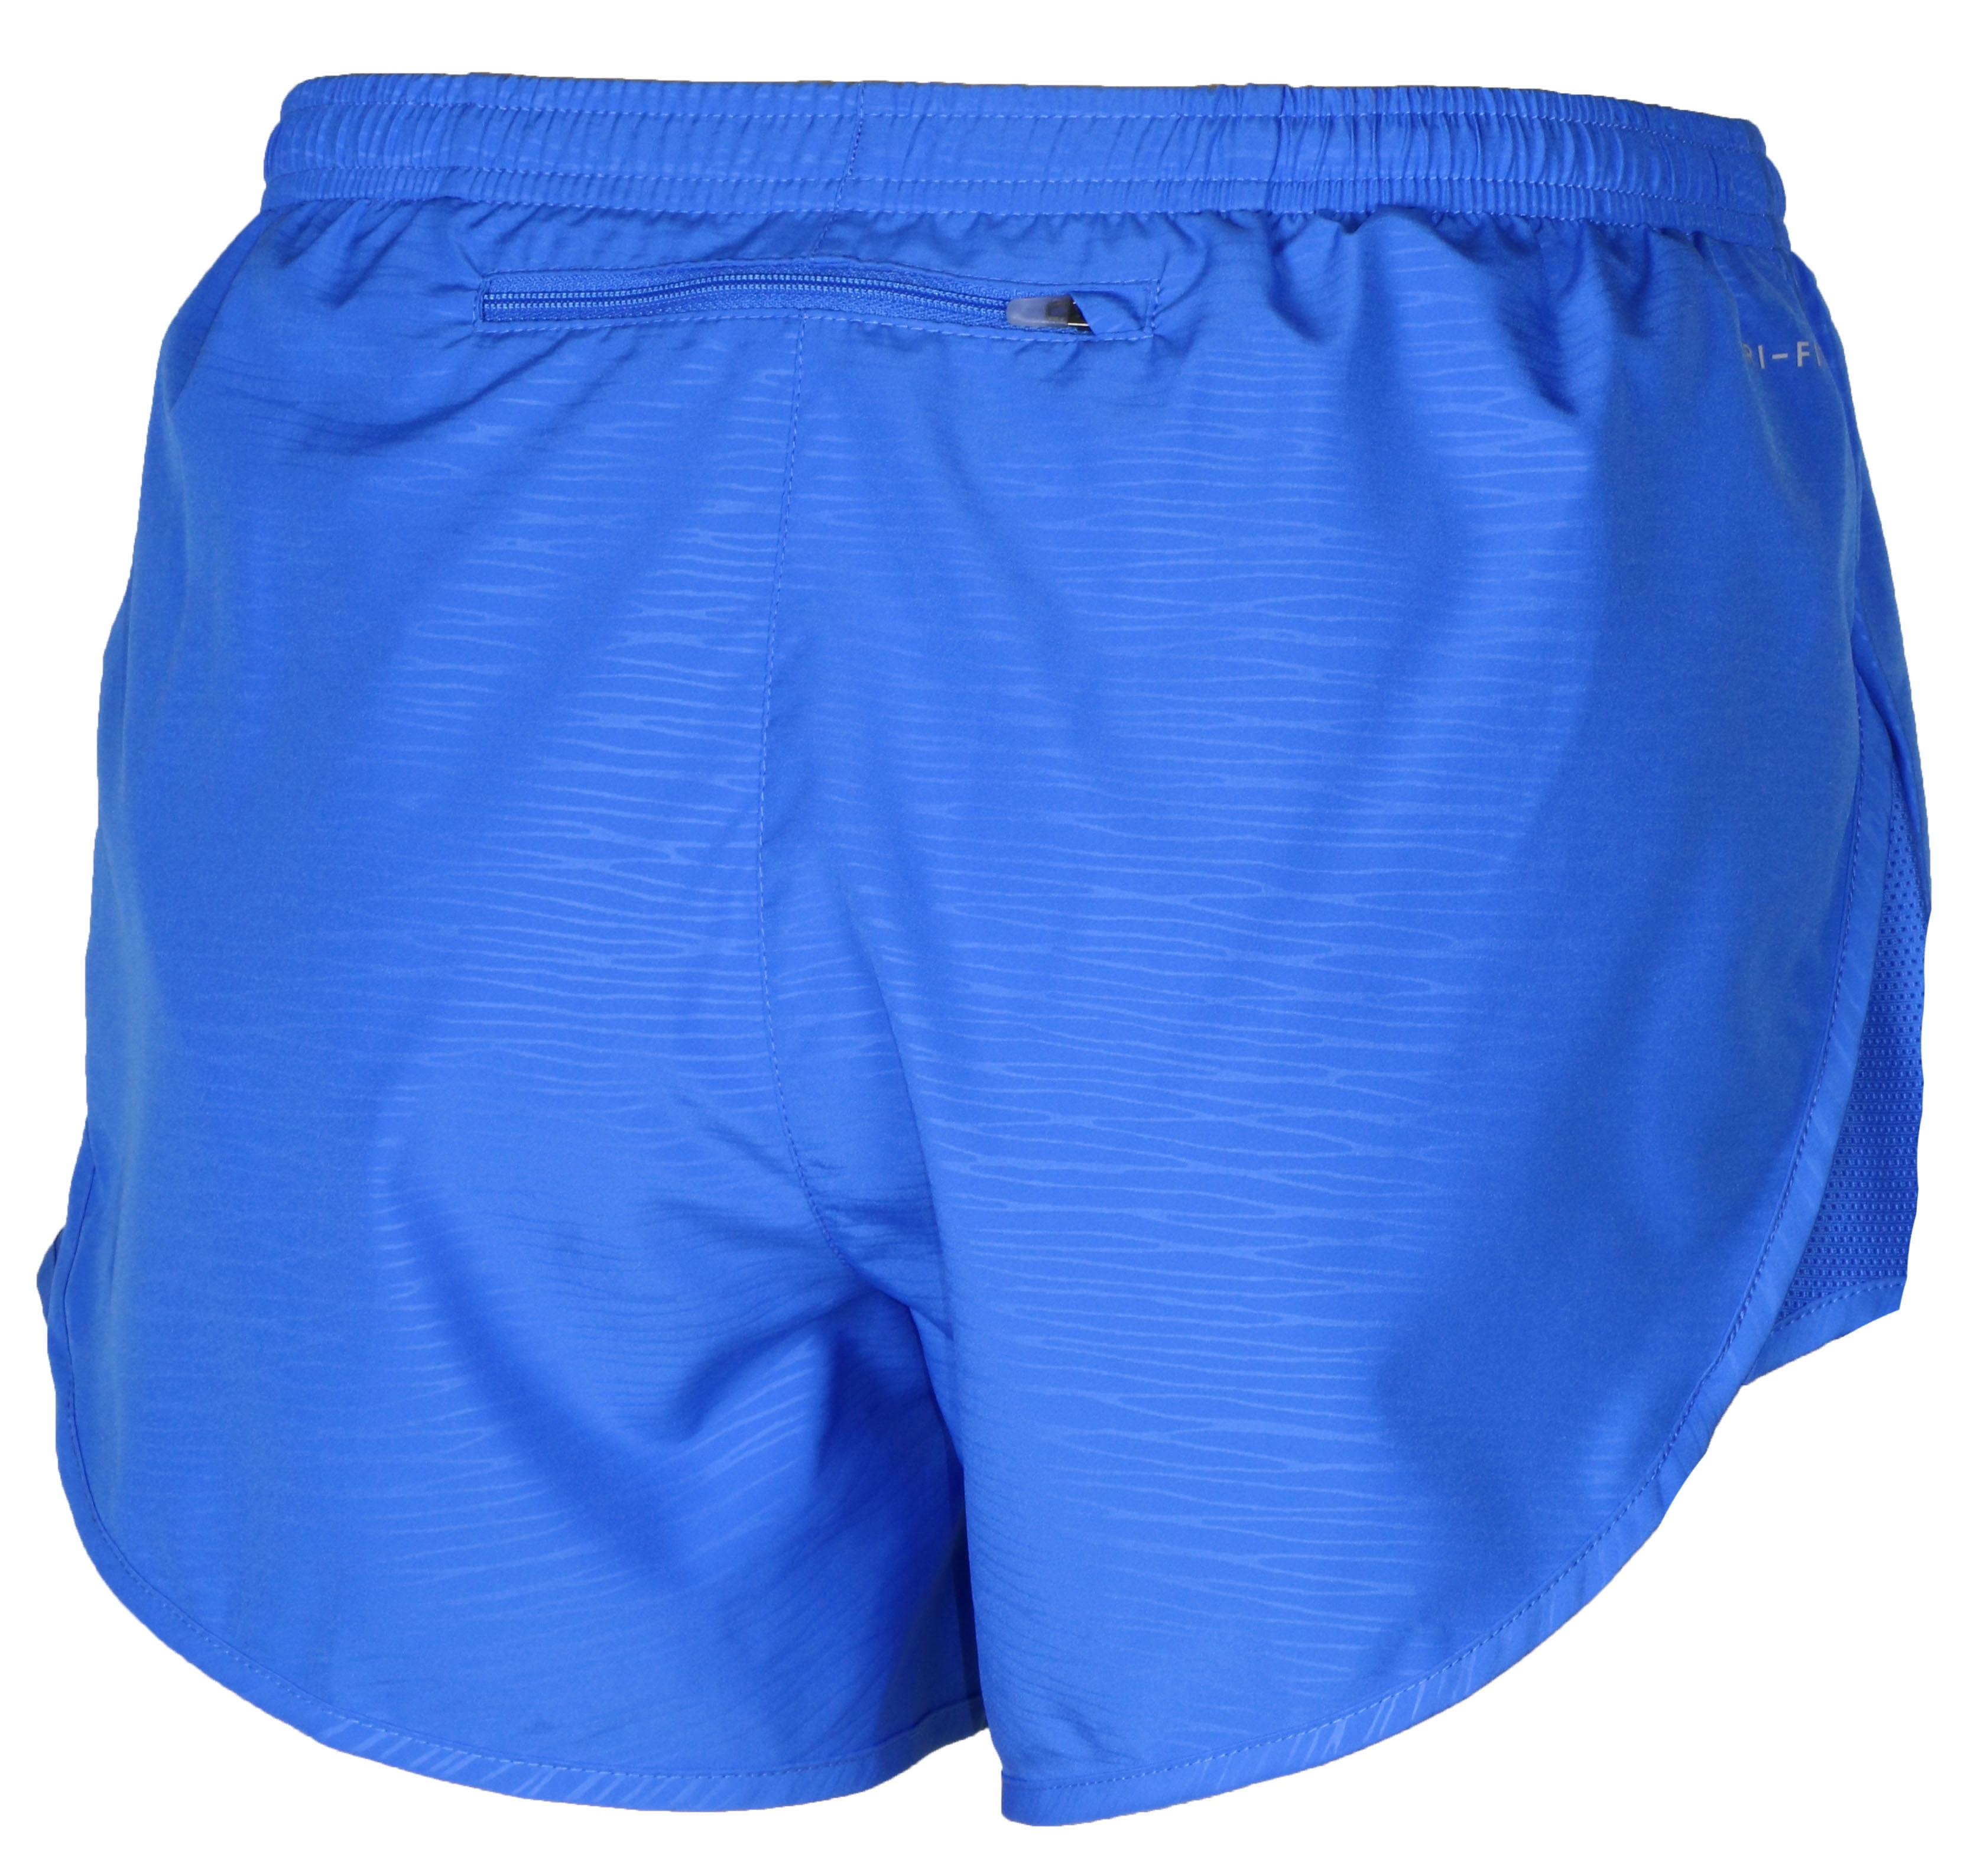 dri fit shorts with zipper pockets